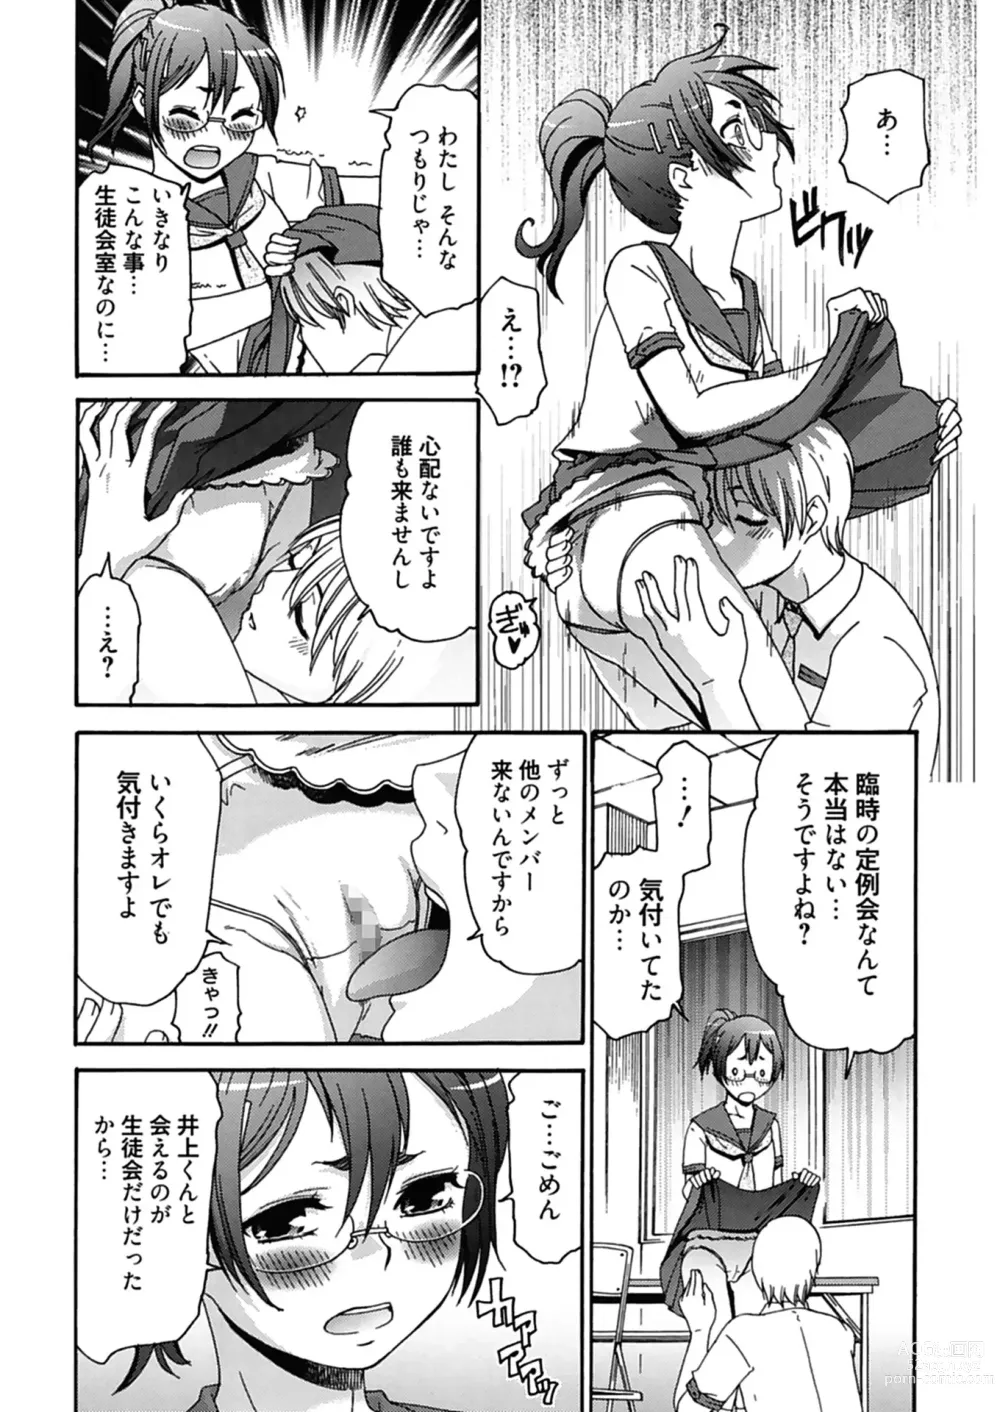 Page 182 of manga Hajimete no Renai Hajimete no Kanojo